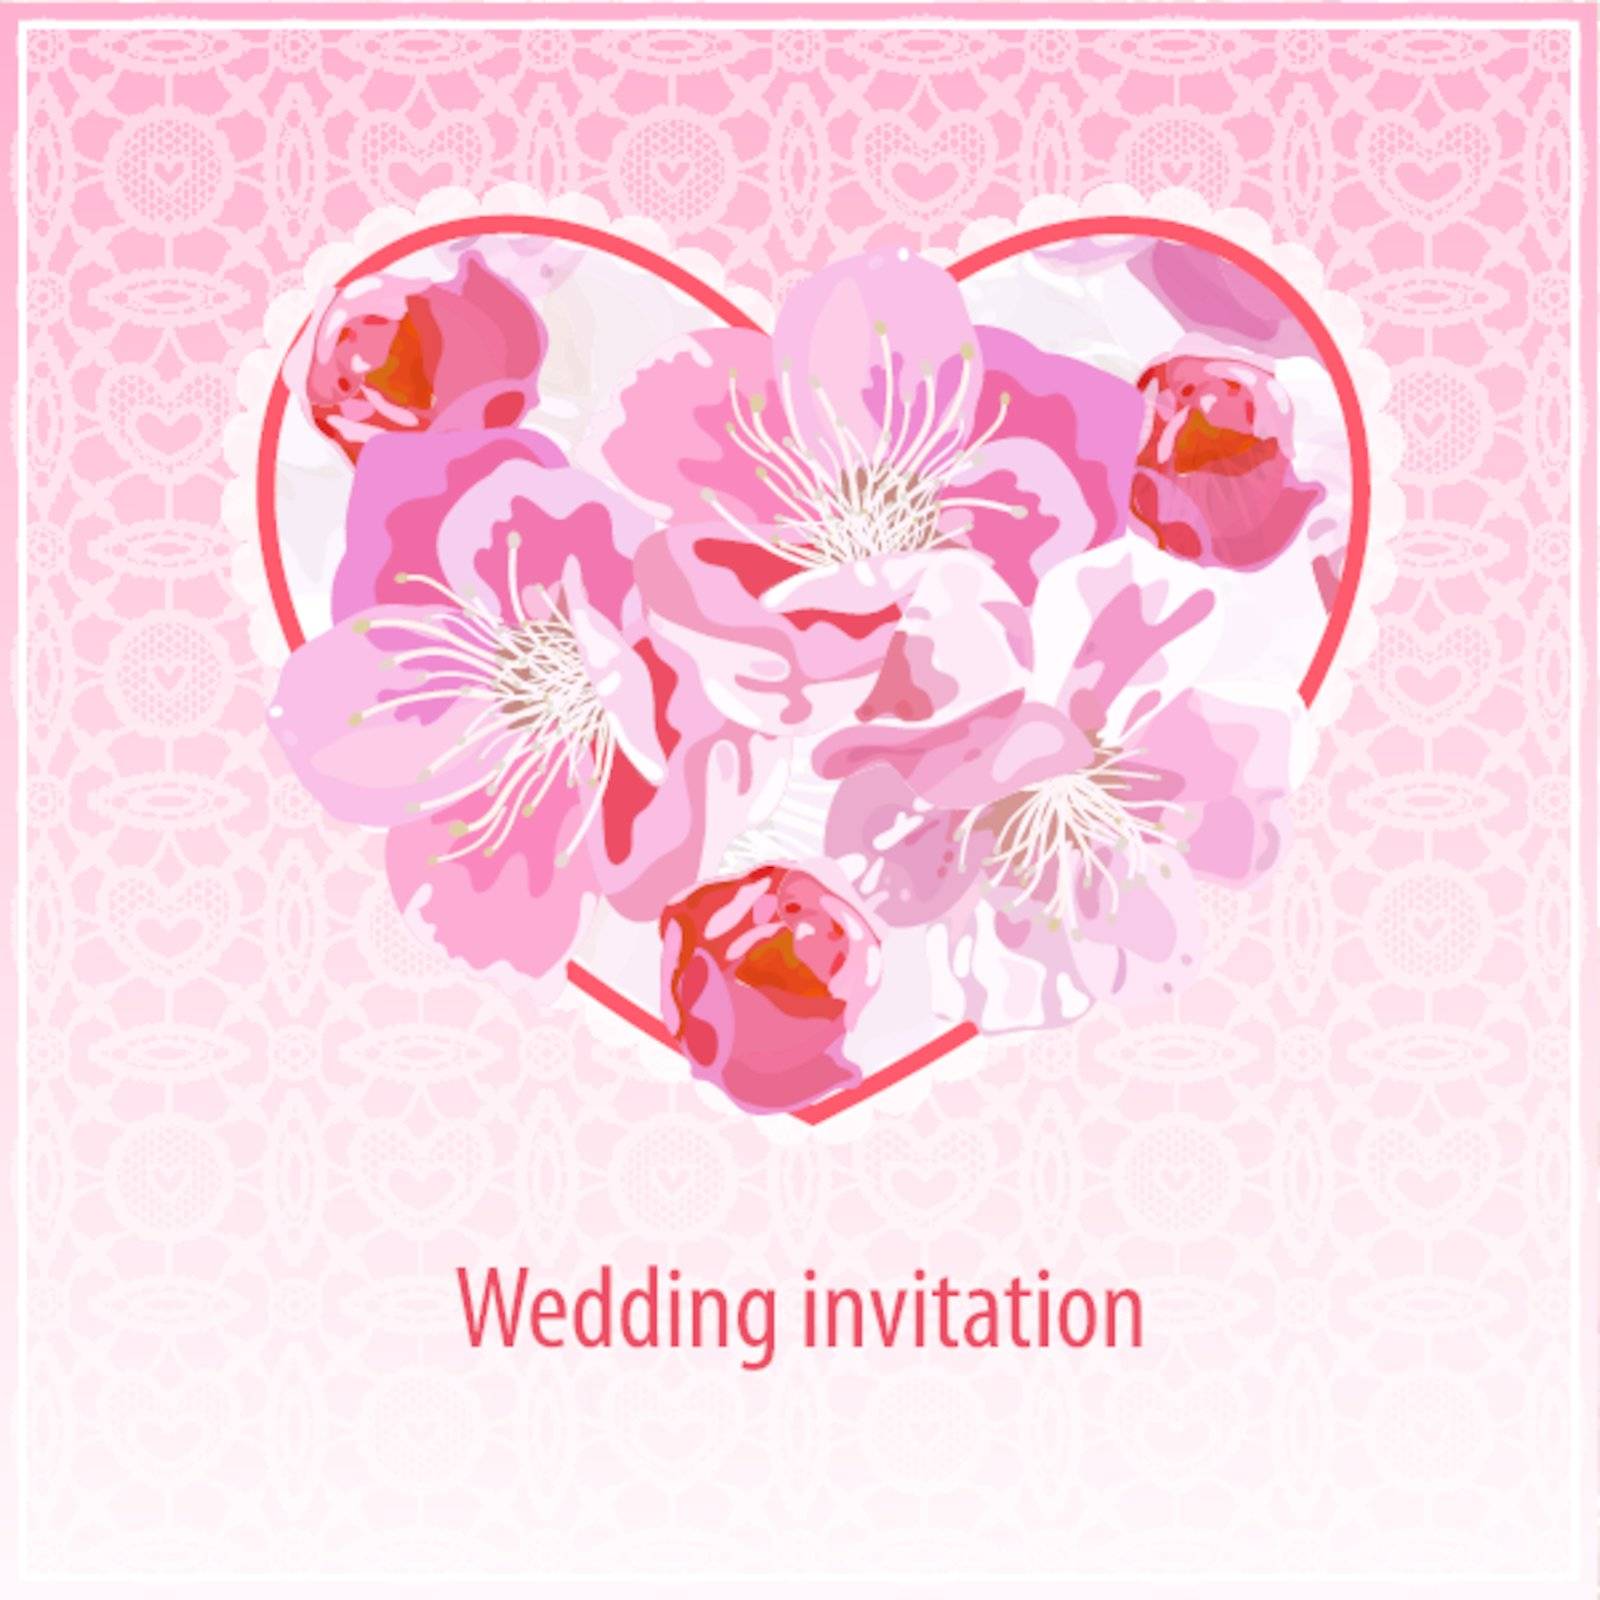 Invitation for wedding. EPS-10 vector illustration